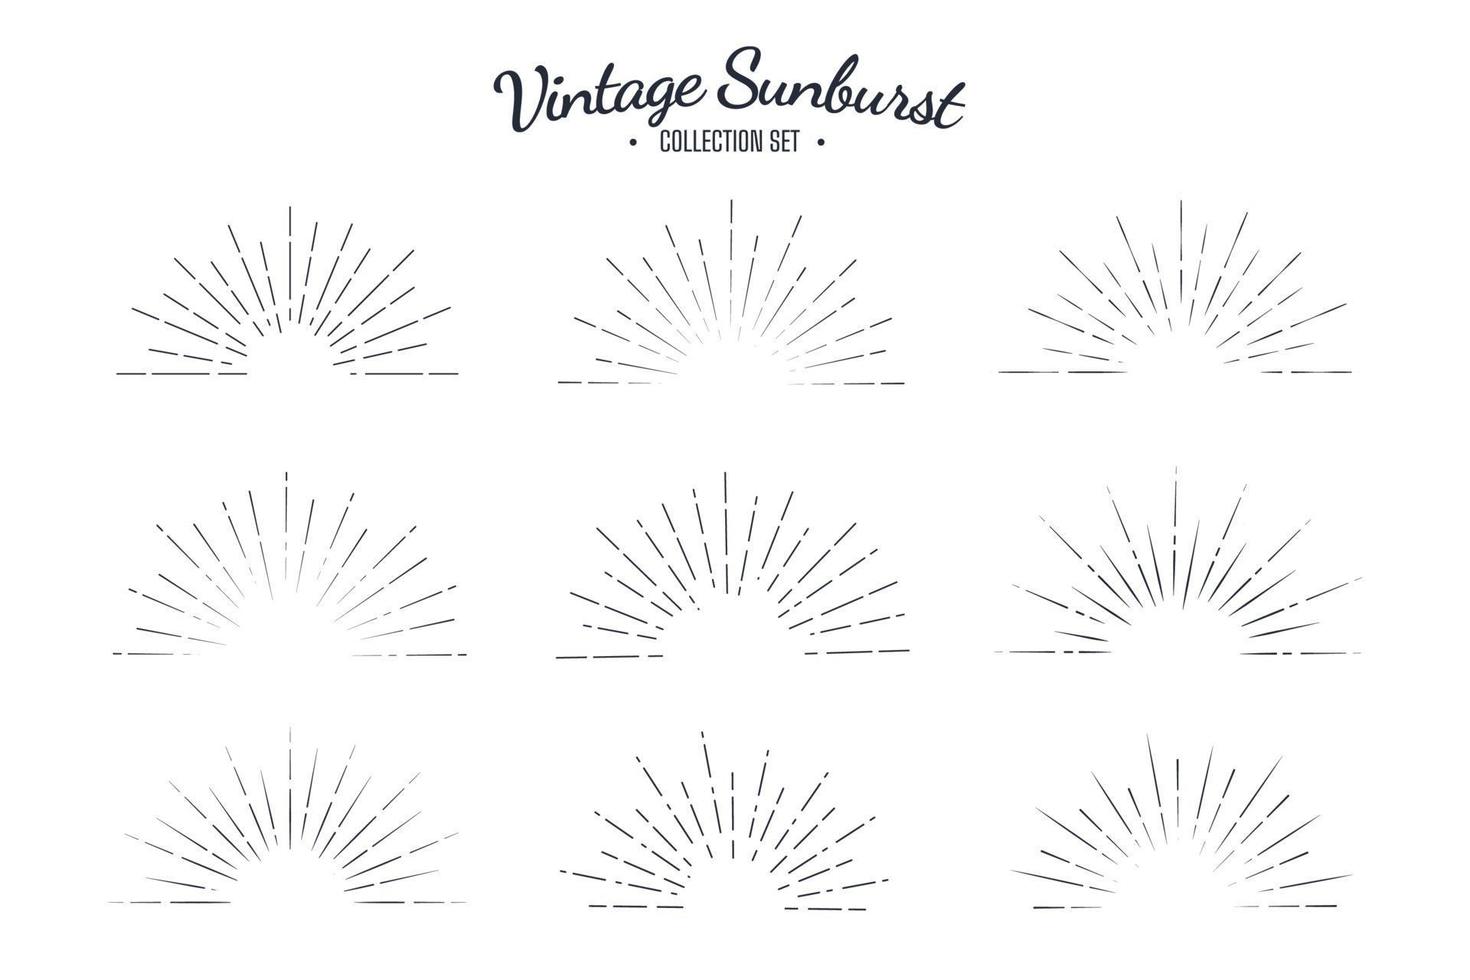 Vintage sunburst vector collection set. Retro solar graphic design stripes